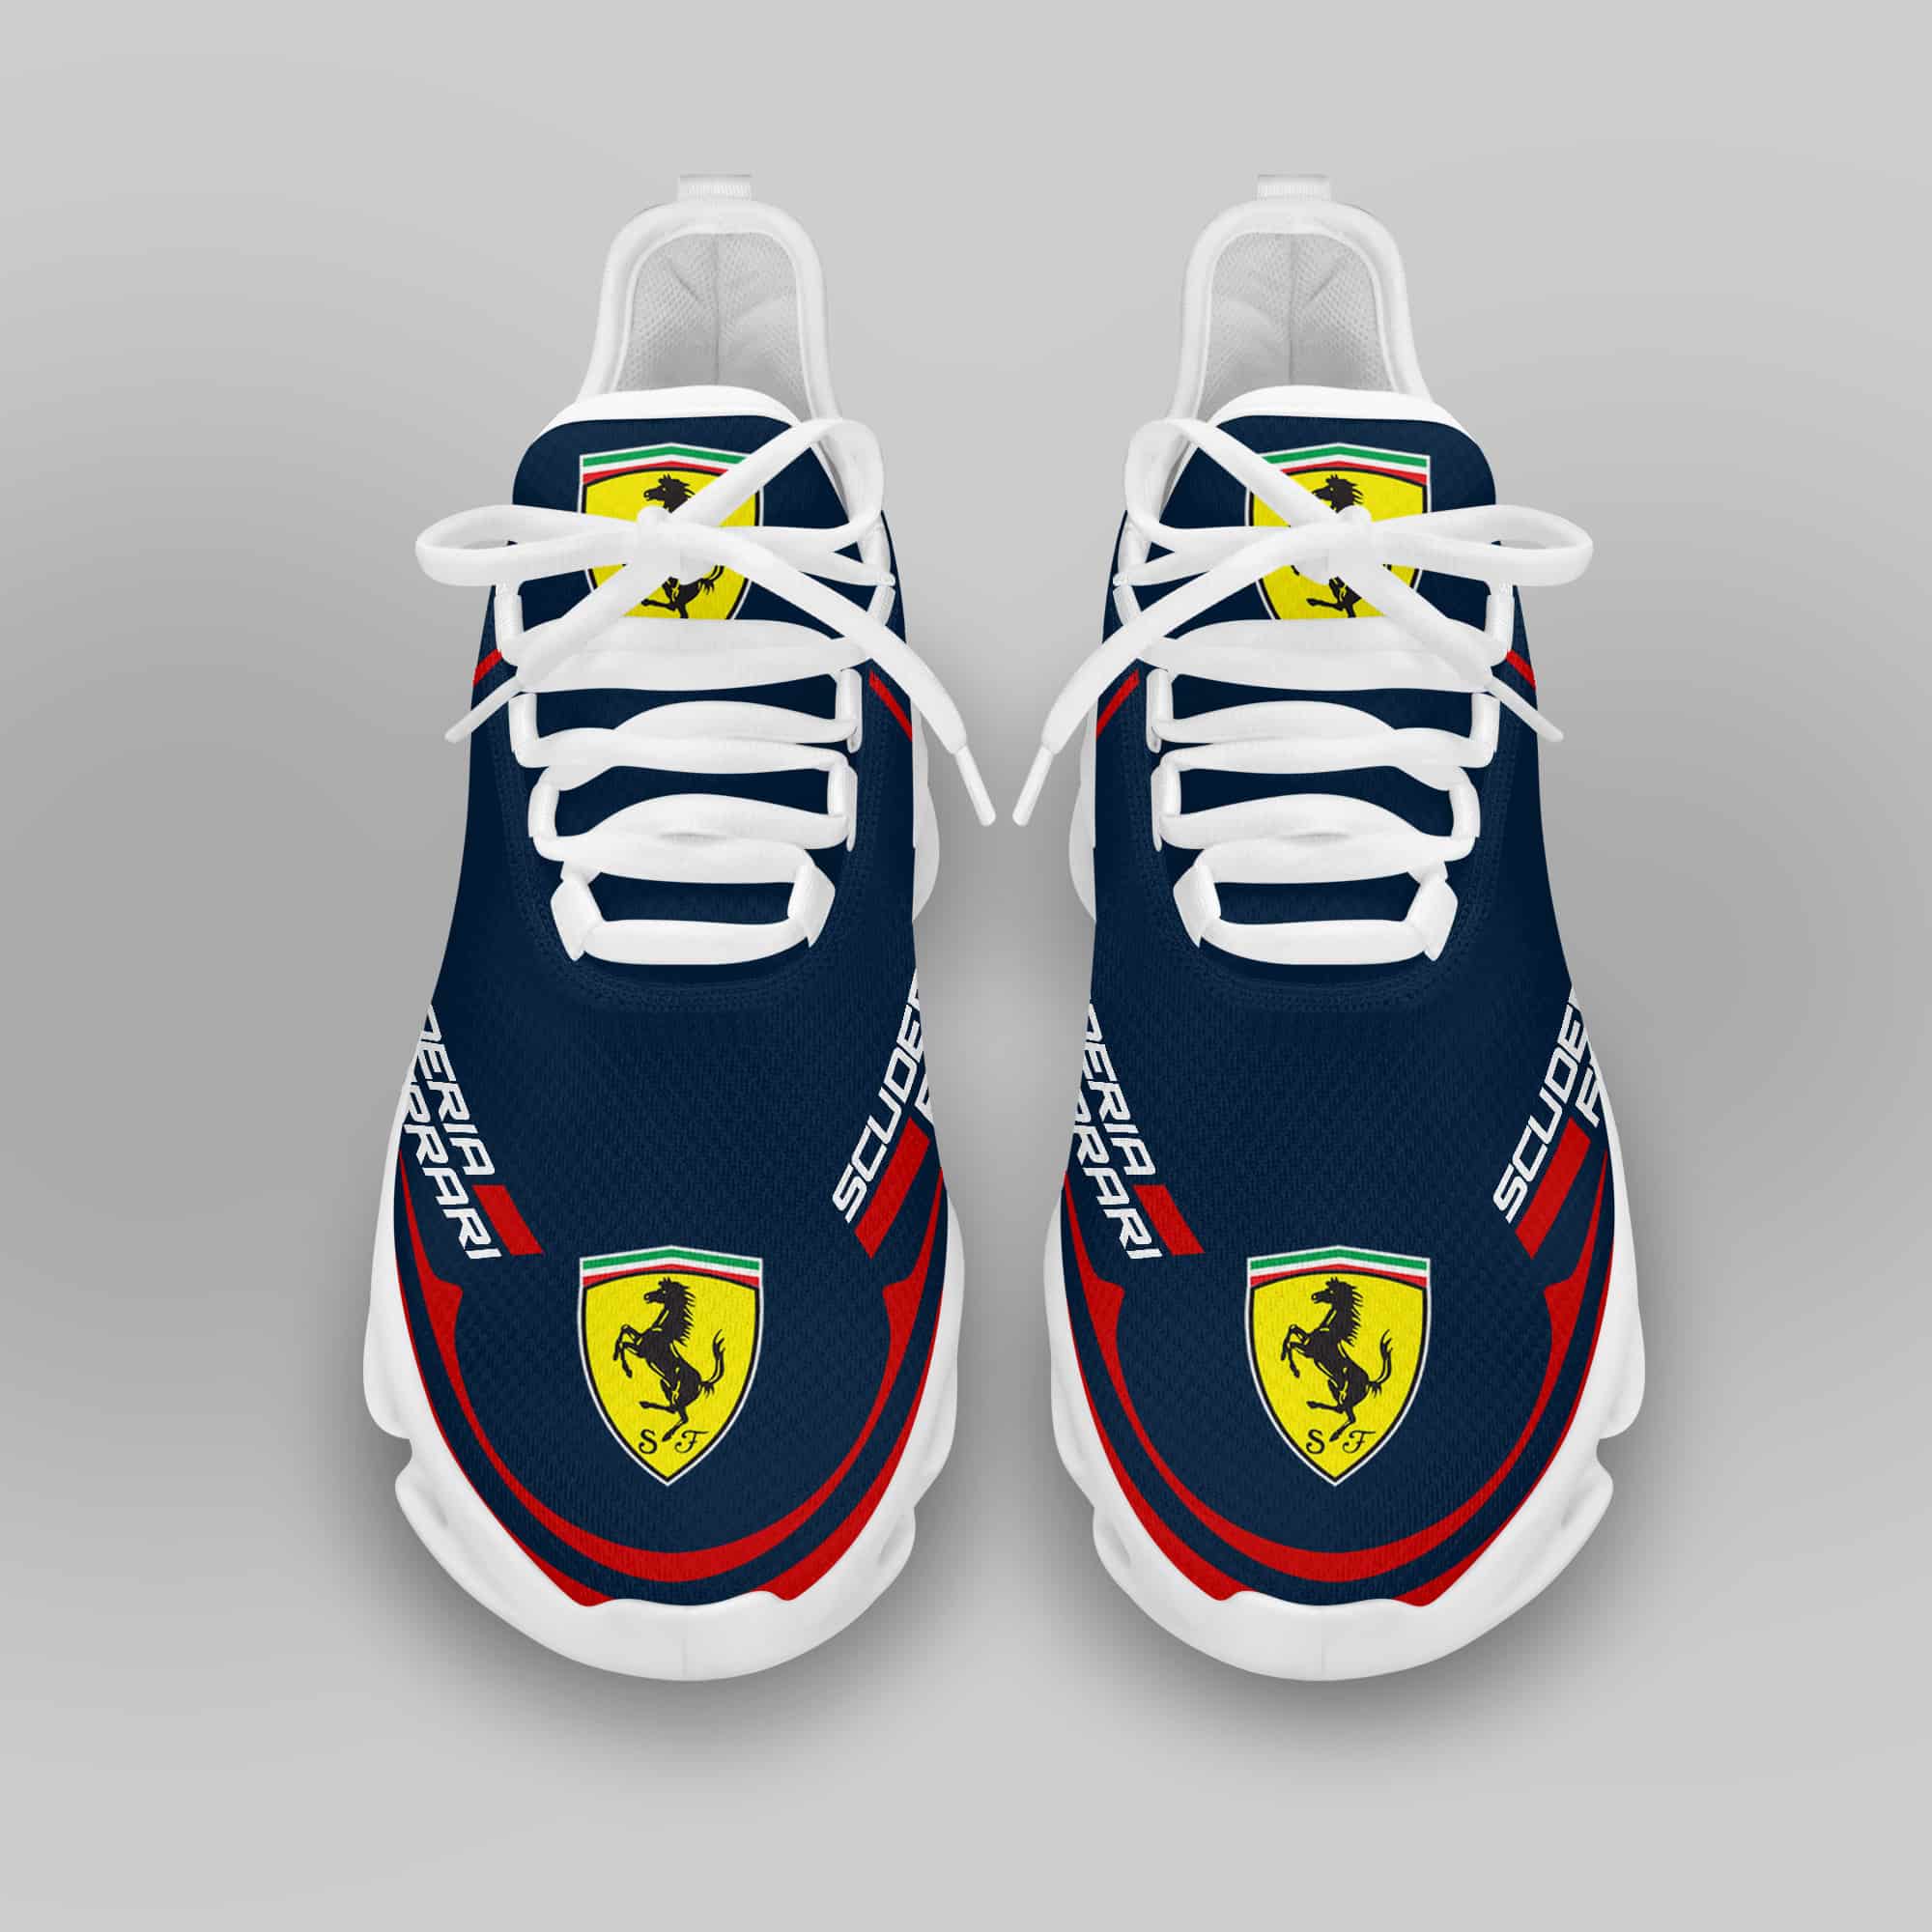 Ferrari Sneaker Running Shoes Max Soul Shoes Sneakers Ver 30 3